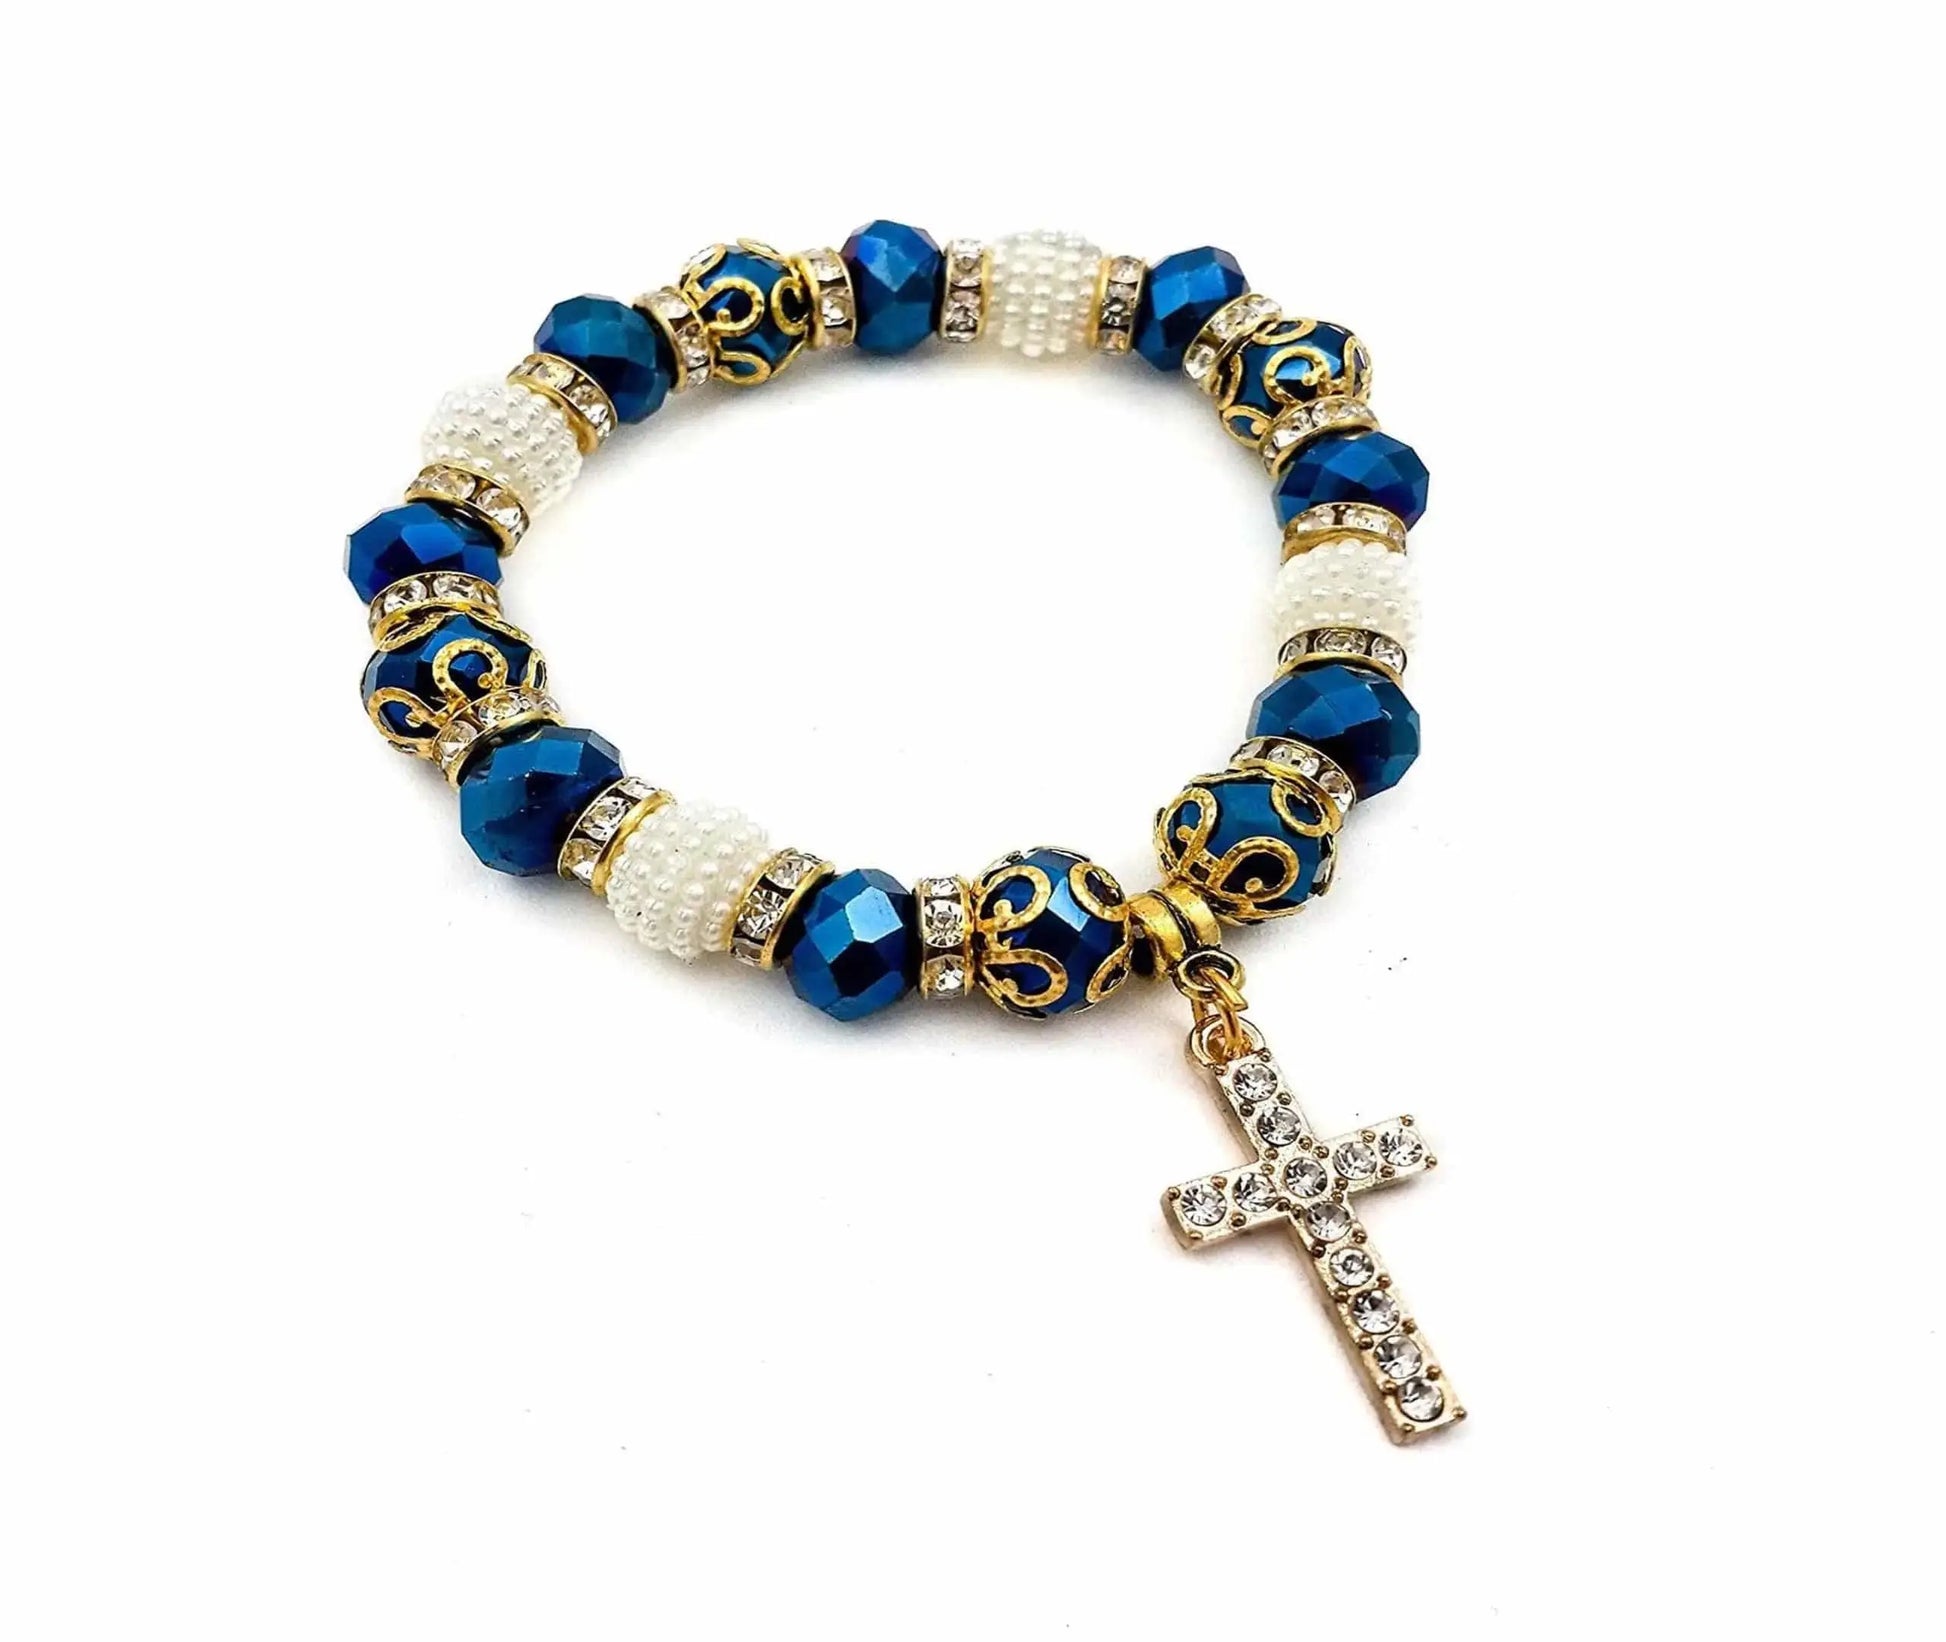 Catholic Cross Rosary Bracelet Deep Blue Crystal Beads Wrist Bangle 